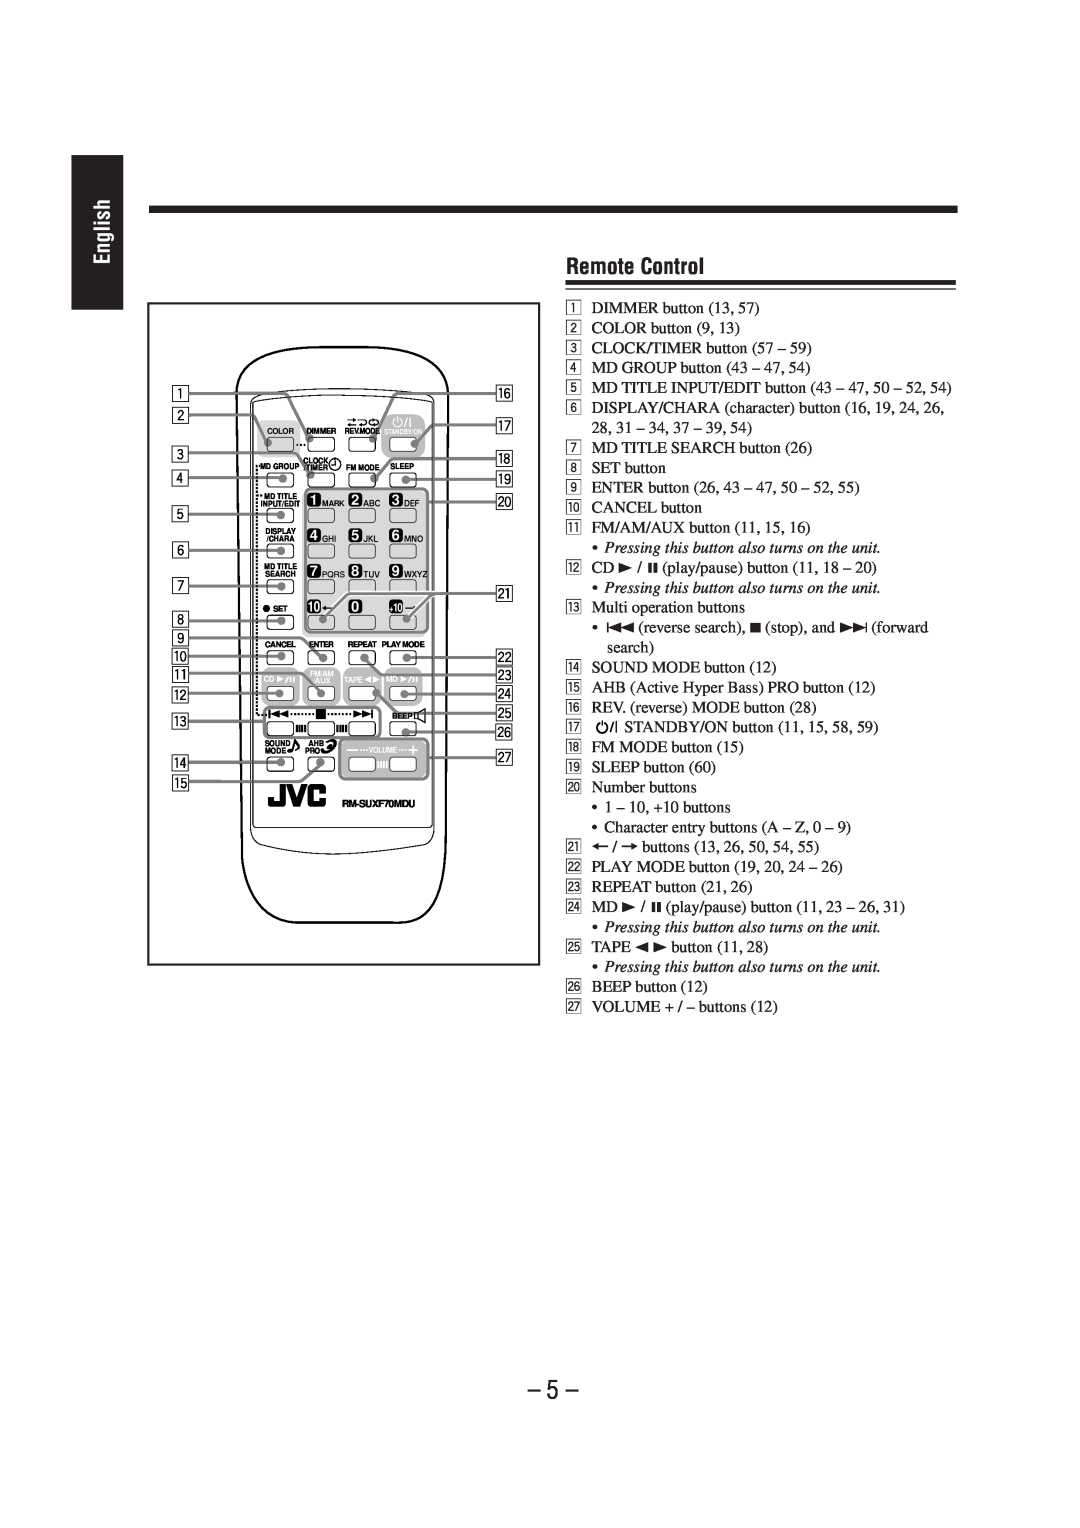 JVC UX-F70MD, UX-F72MD manual 5, Remote Control, English 